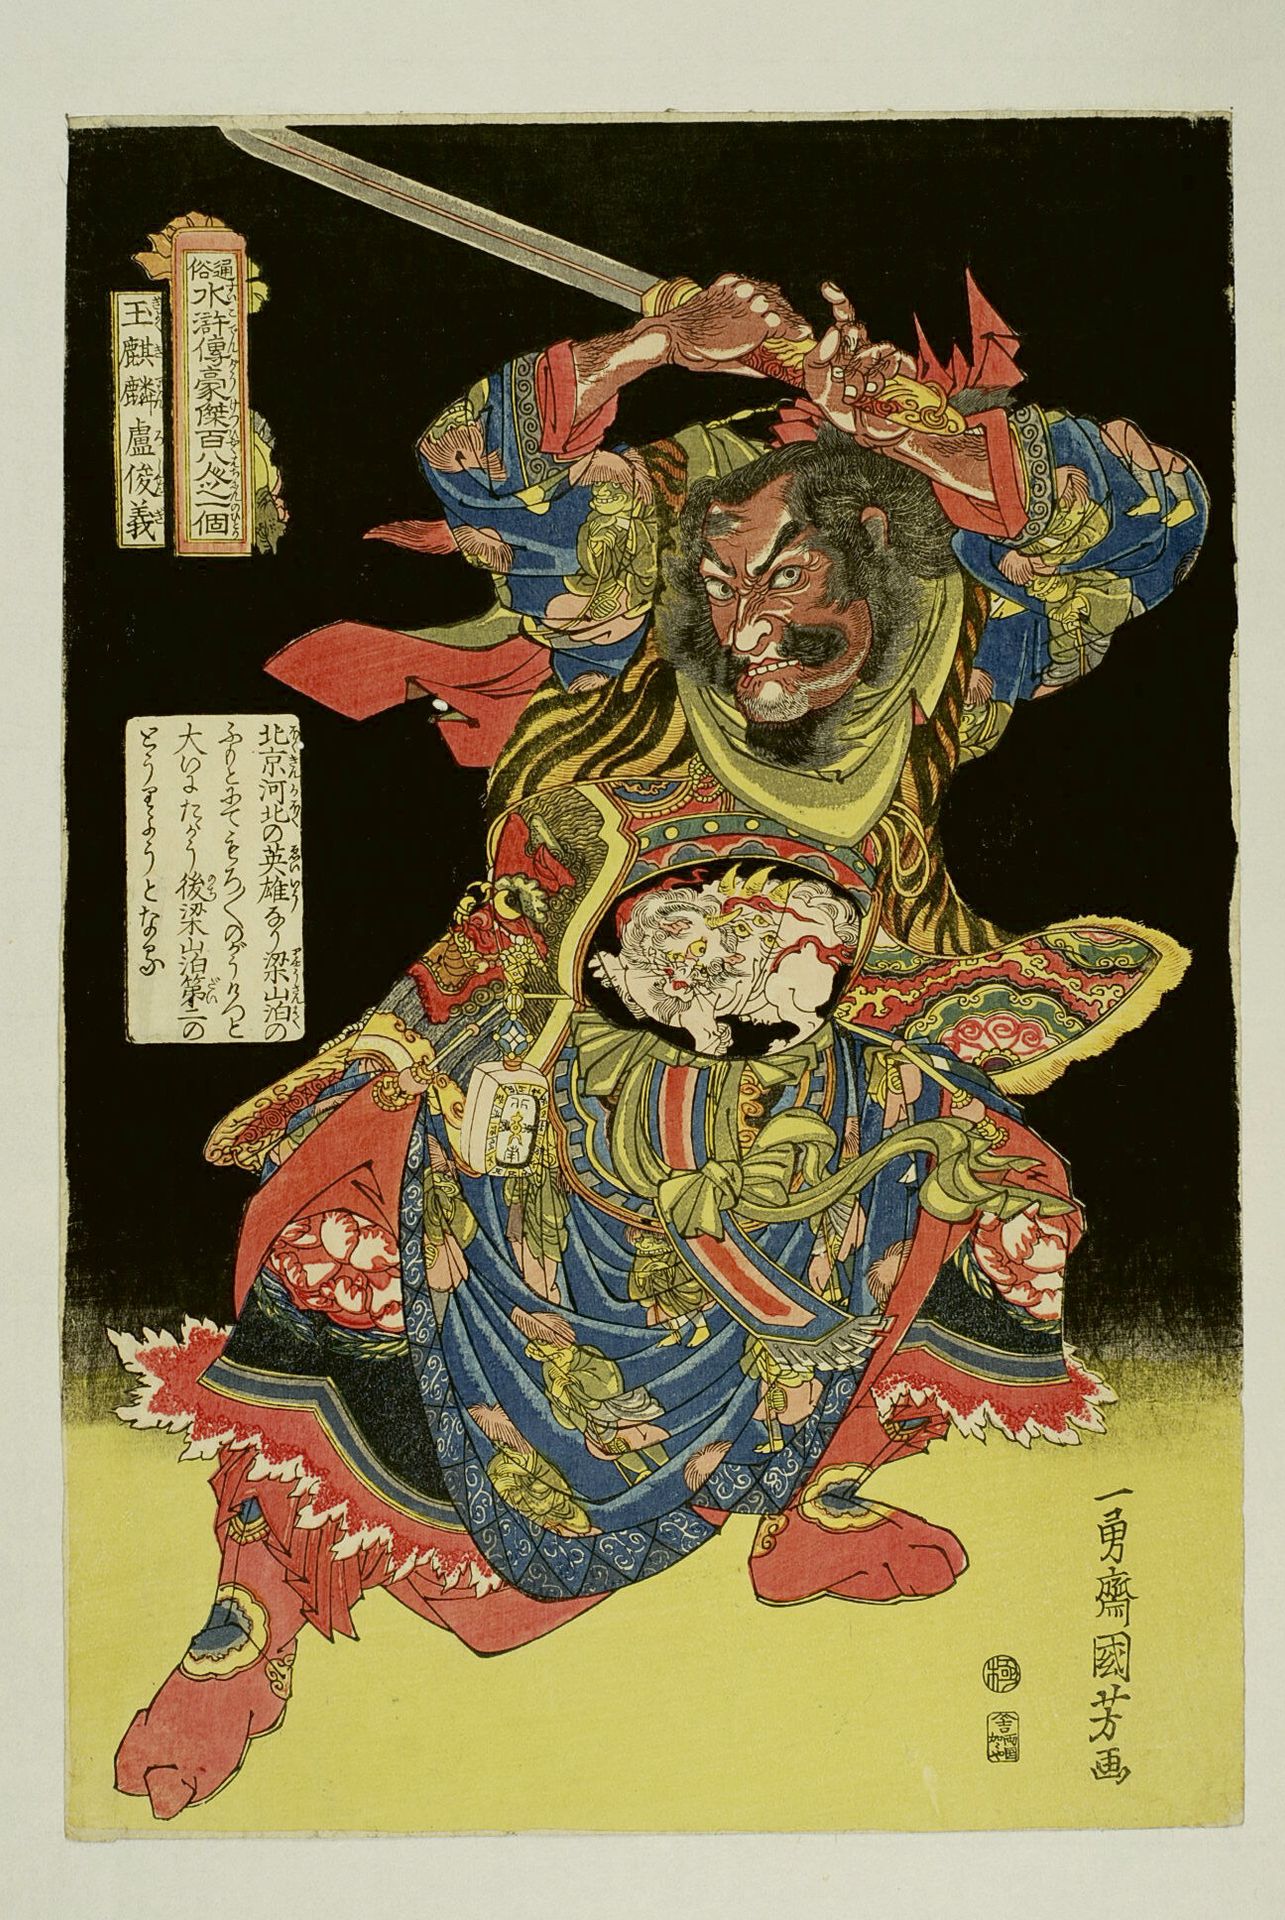 Null 宇都宫邦彦 (1797-1861)
水浒传》系列中的 "大班"（Oban tate-e），《水浒传》中的108位英雄，板块为 "行者"（Gyokkir&hellip;